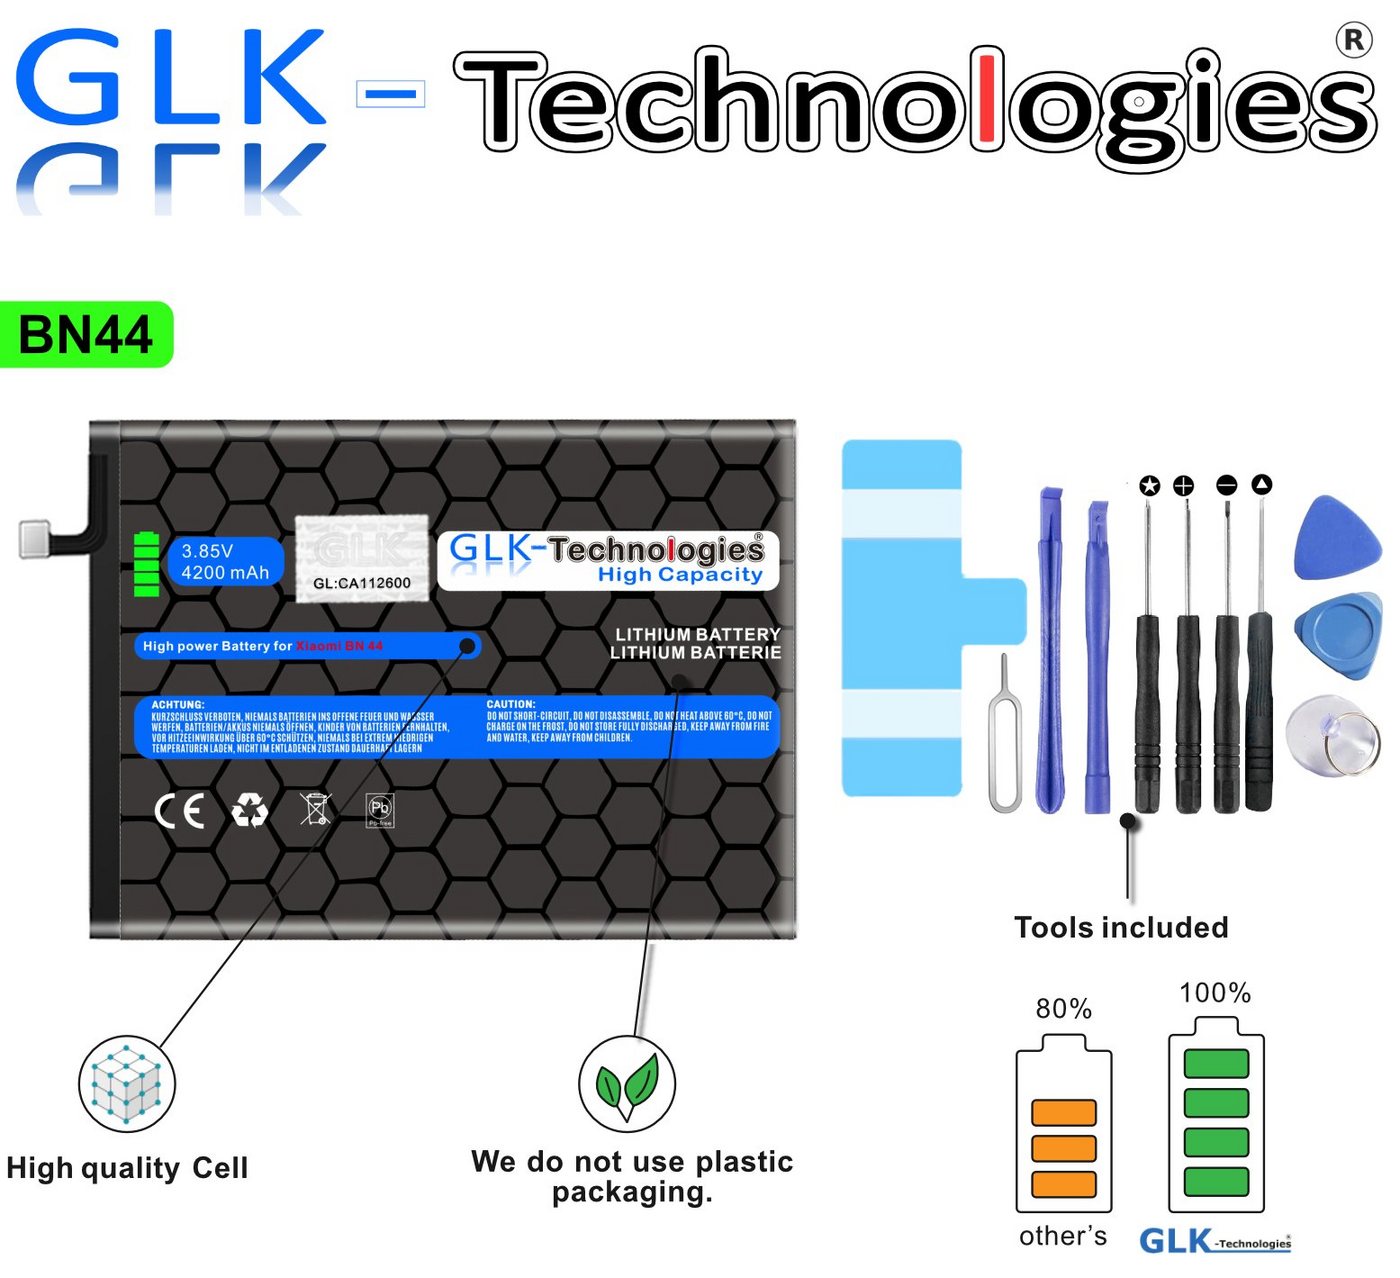 GLK-Technologies High Power Ersatzakku BN44 für Xiaomi Redmi Note 5 Redmi 5 Plus, Original GLK-Technologies Battery, accu, 4200mAh Akku, inkl. Werkzeug Set Kit NEU Smartphone-Akku 4200 mAh (3.8 V) von GLK-Technologies